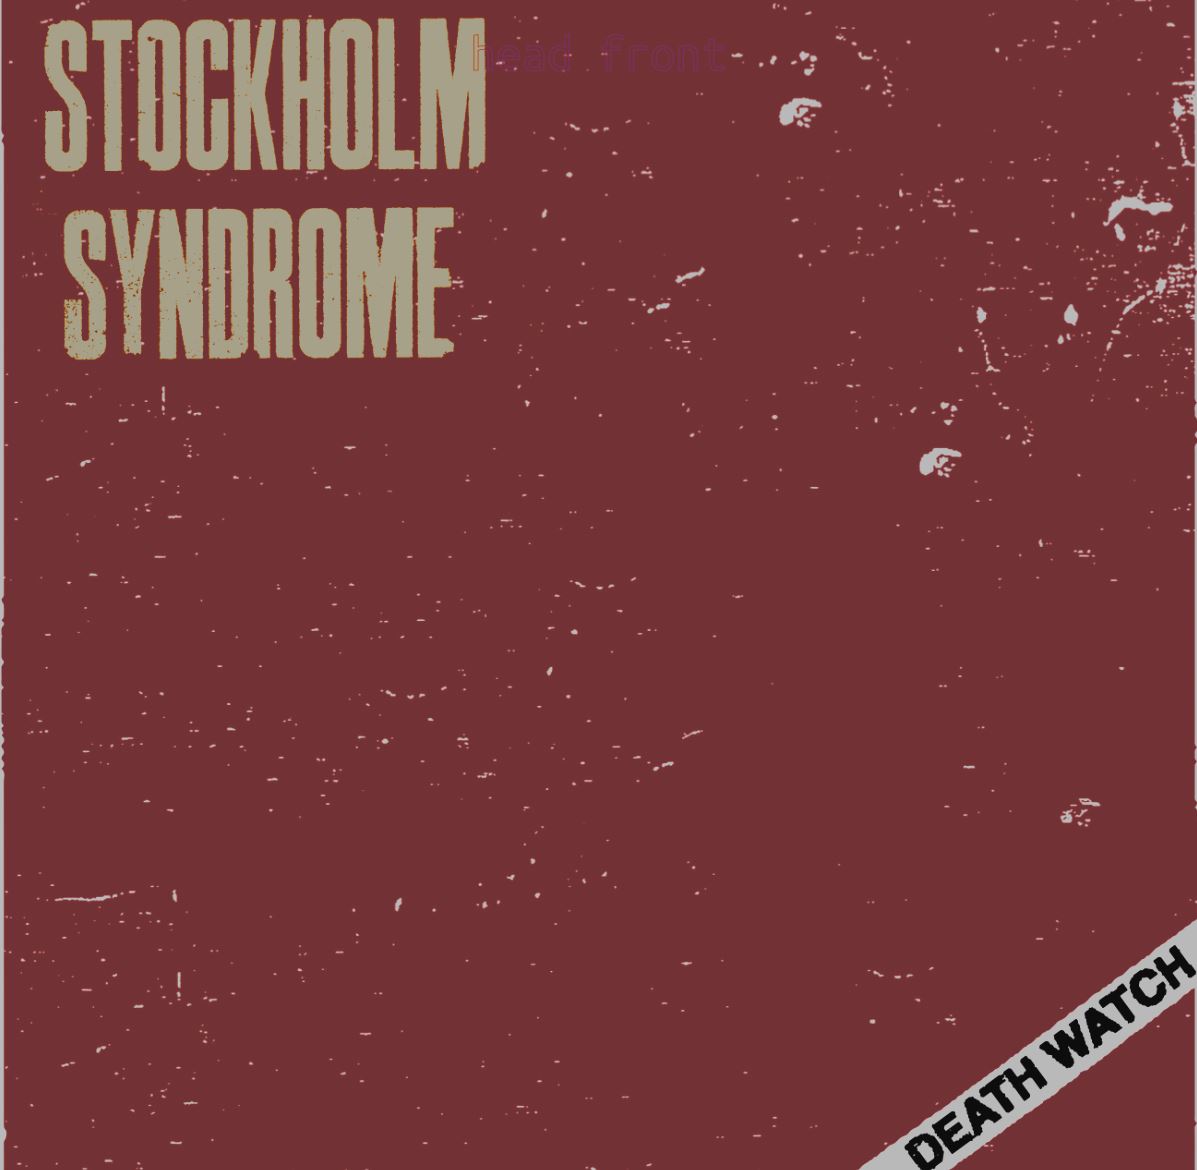 Stockholm Syndrome - Death Watch LP (black vinyl)